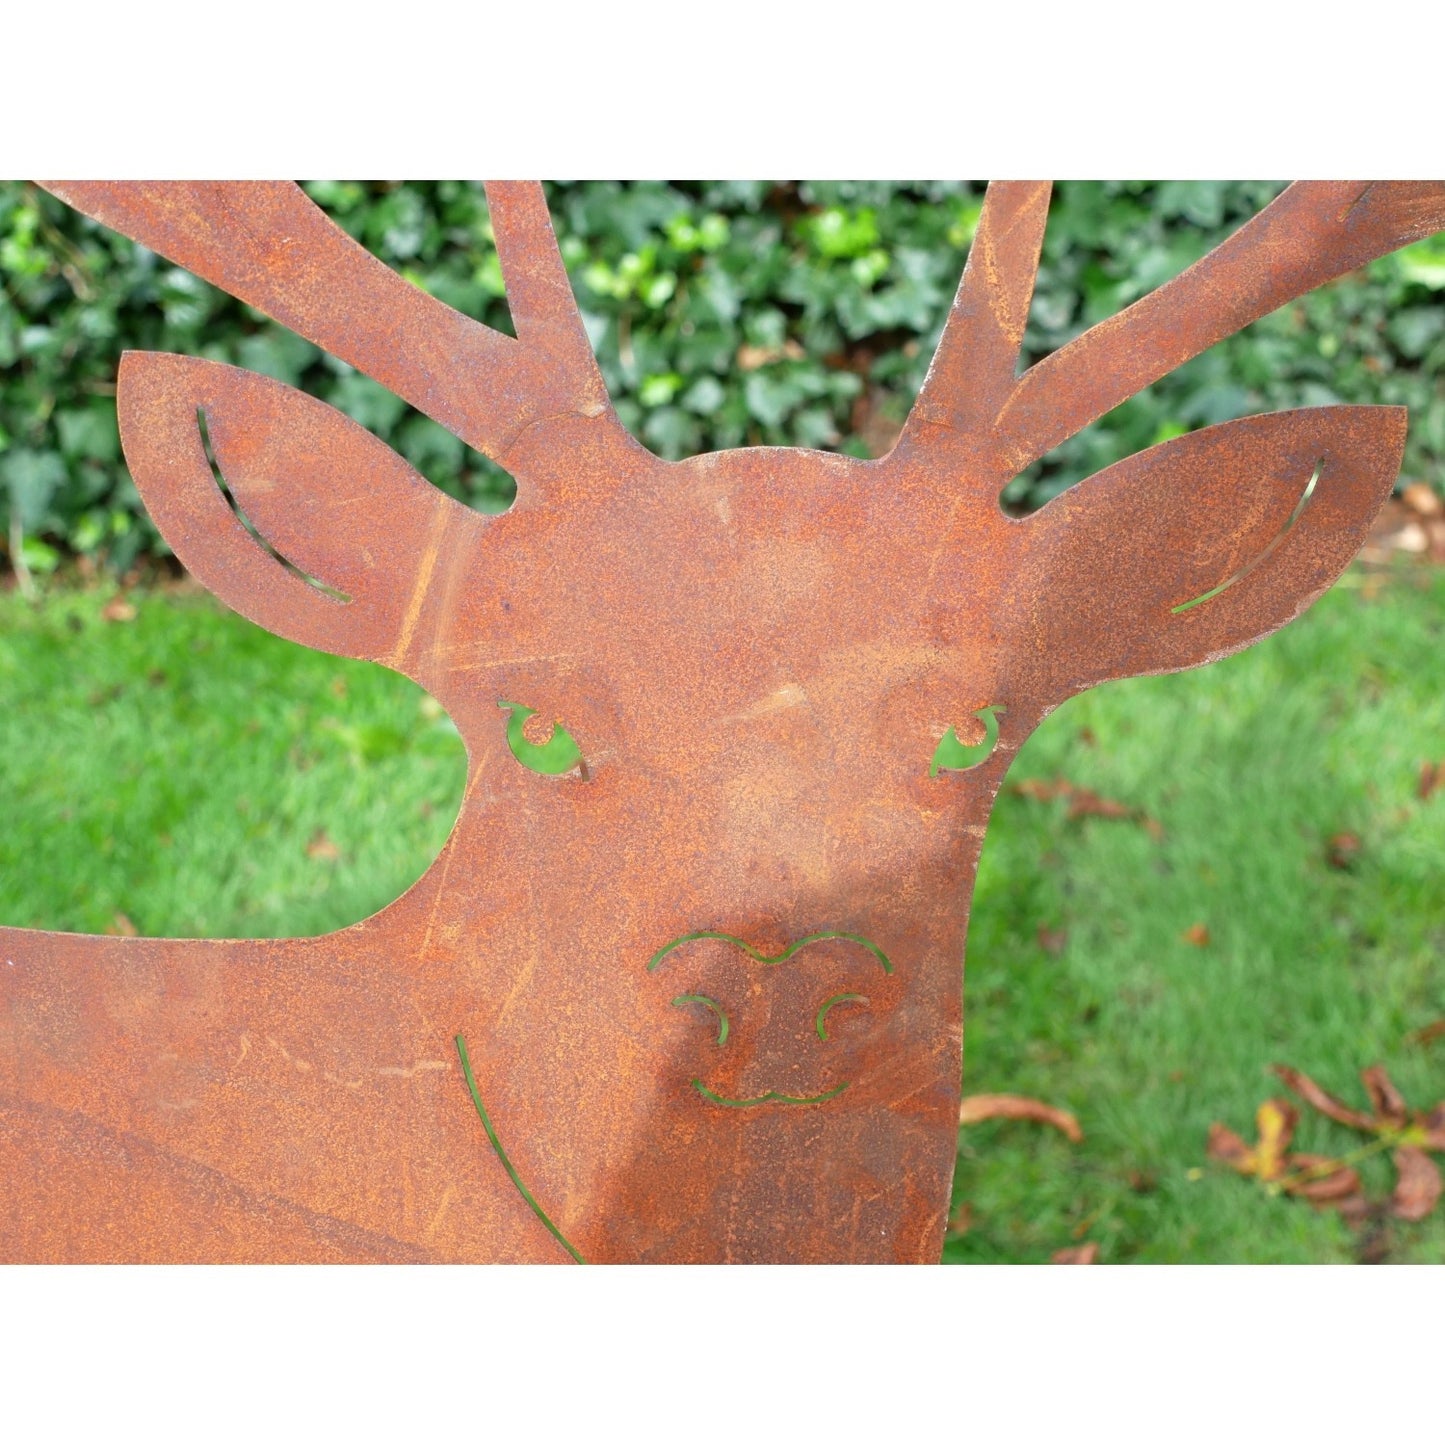 Large Rusty Deer Stag Silhouette Freestanding Garden Animal Metal 4'3"H 4'5" W